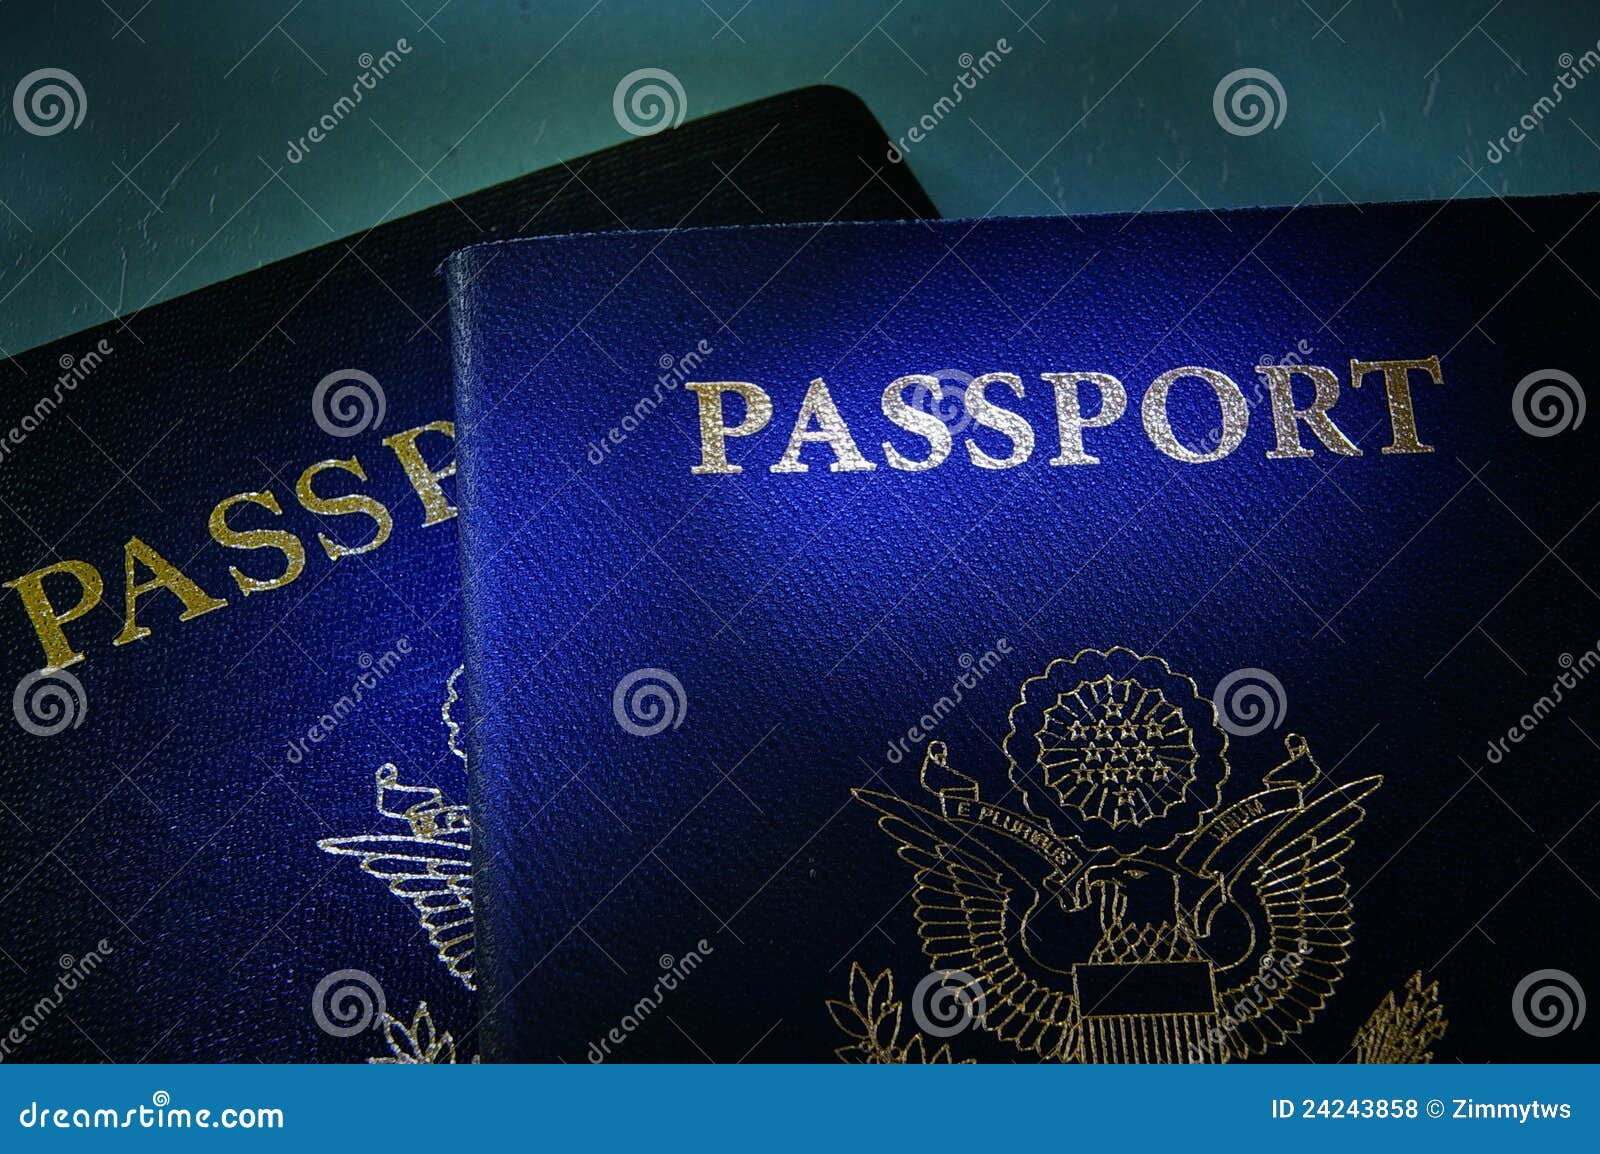 government passports